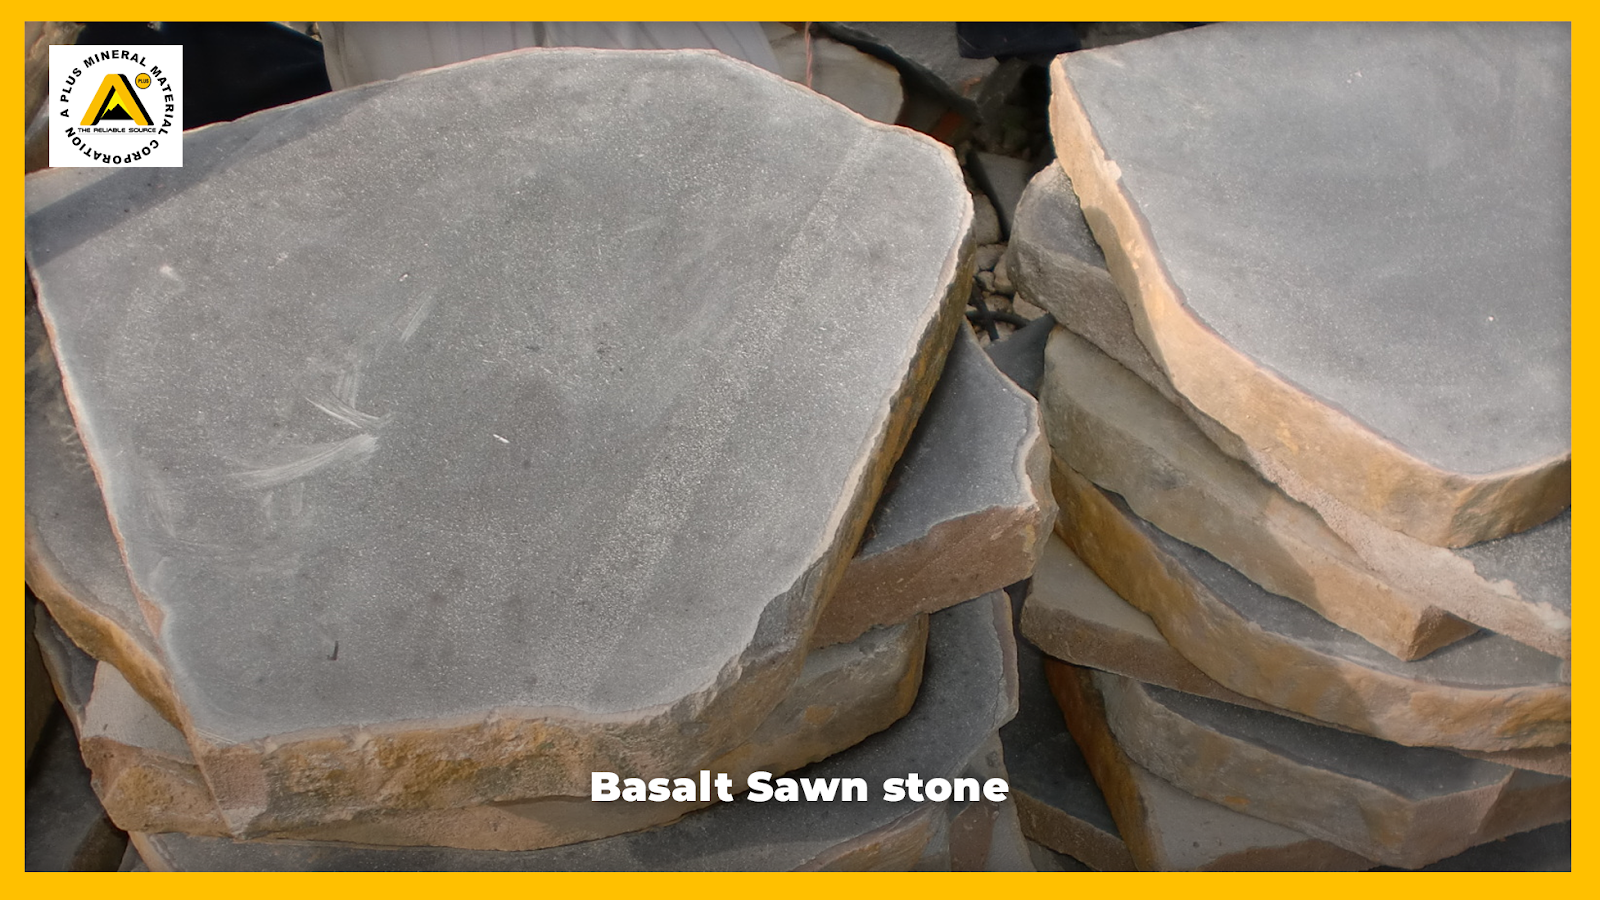 Basalt Sawn stone